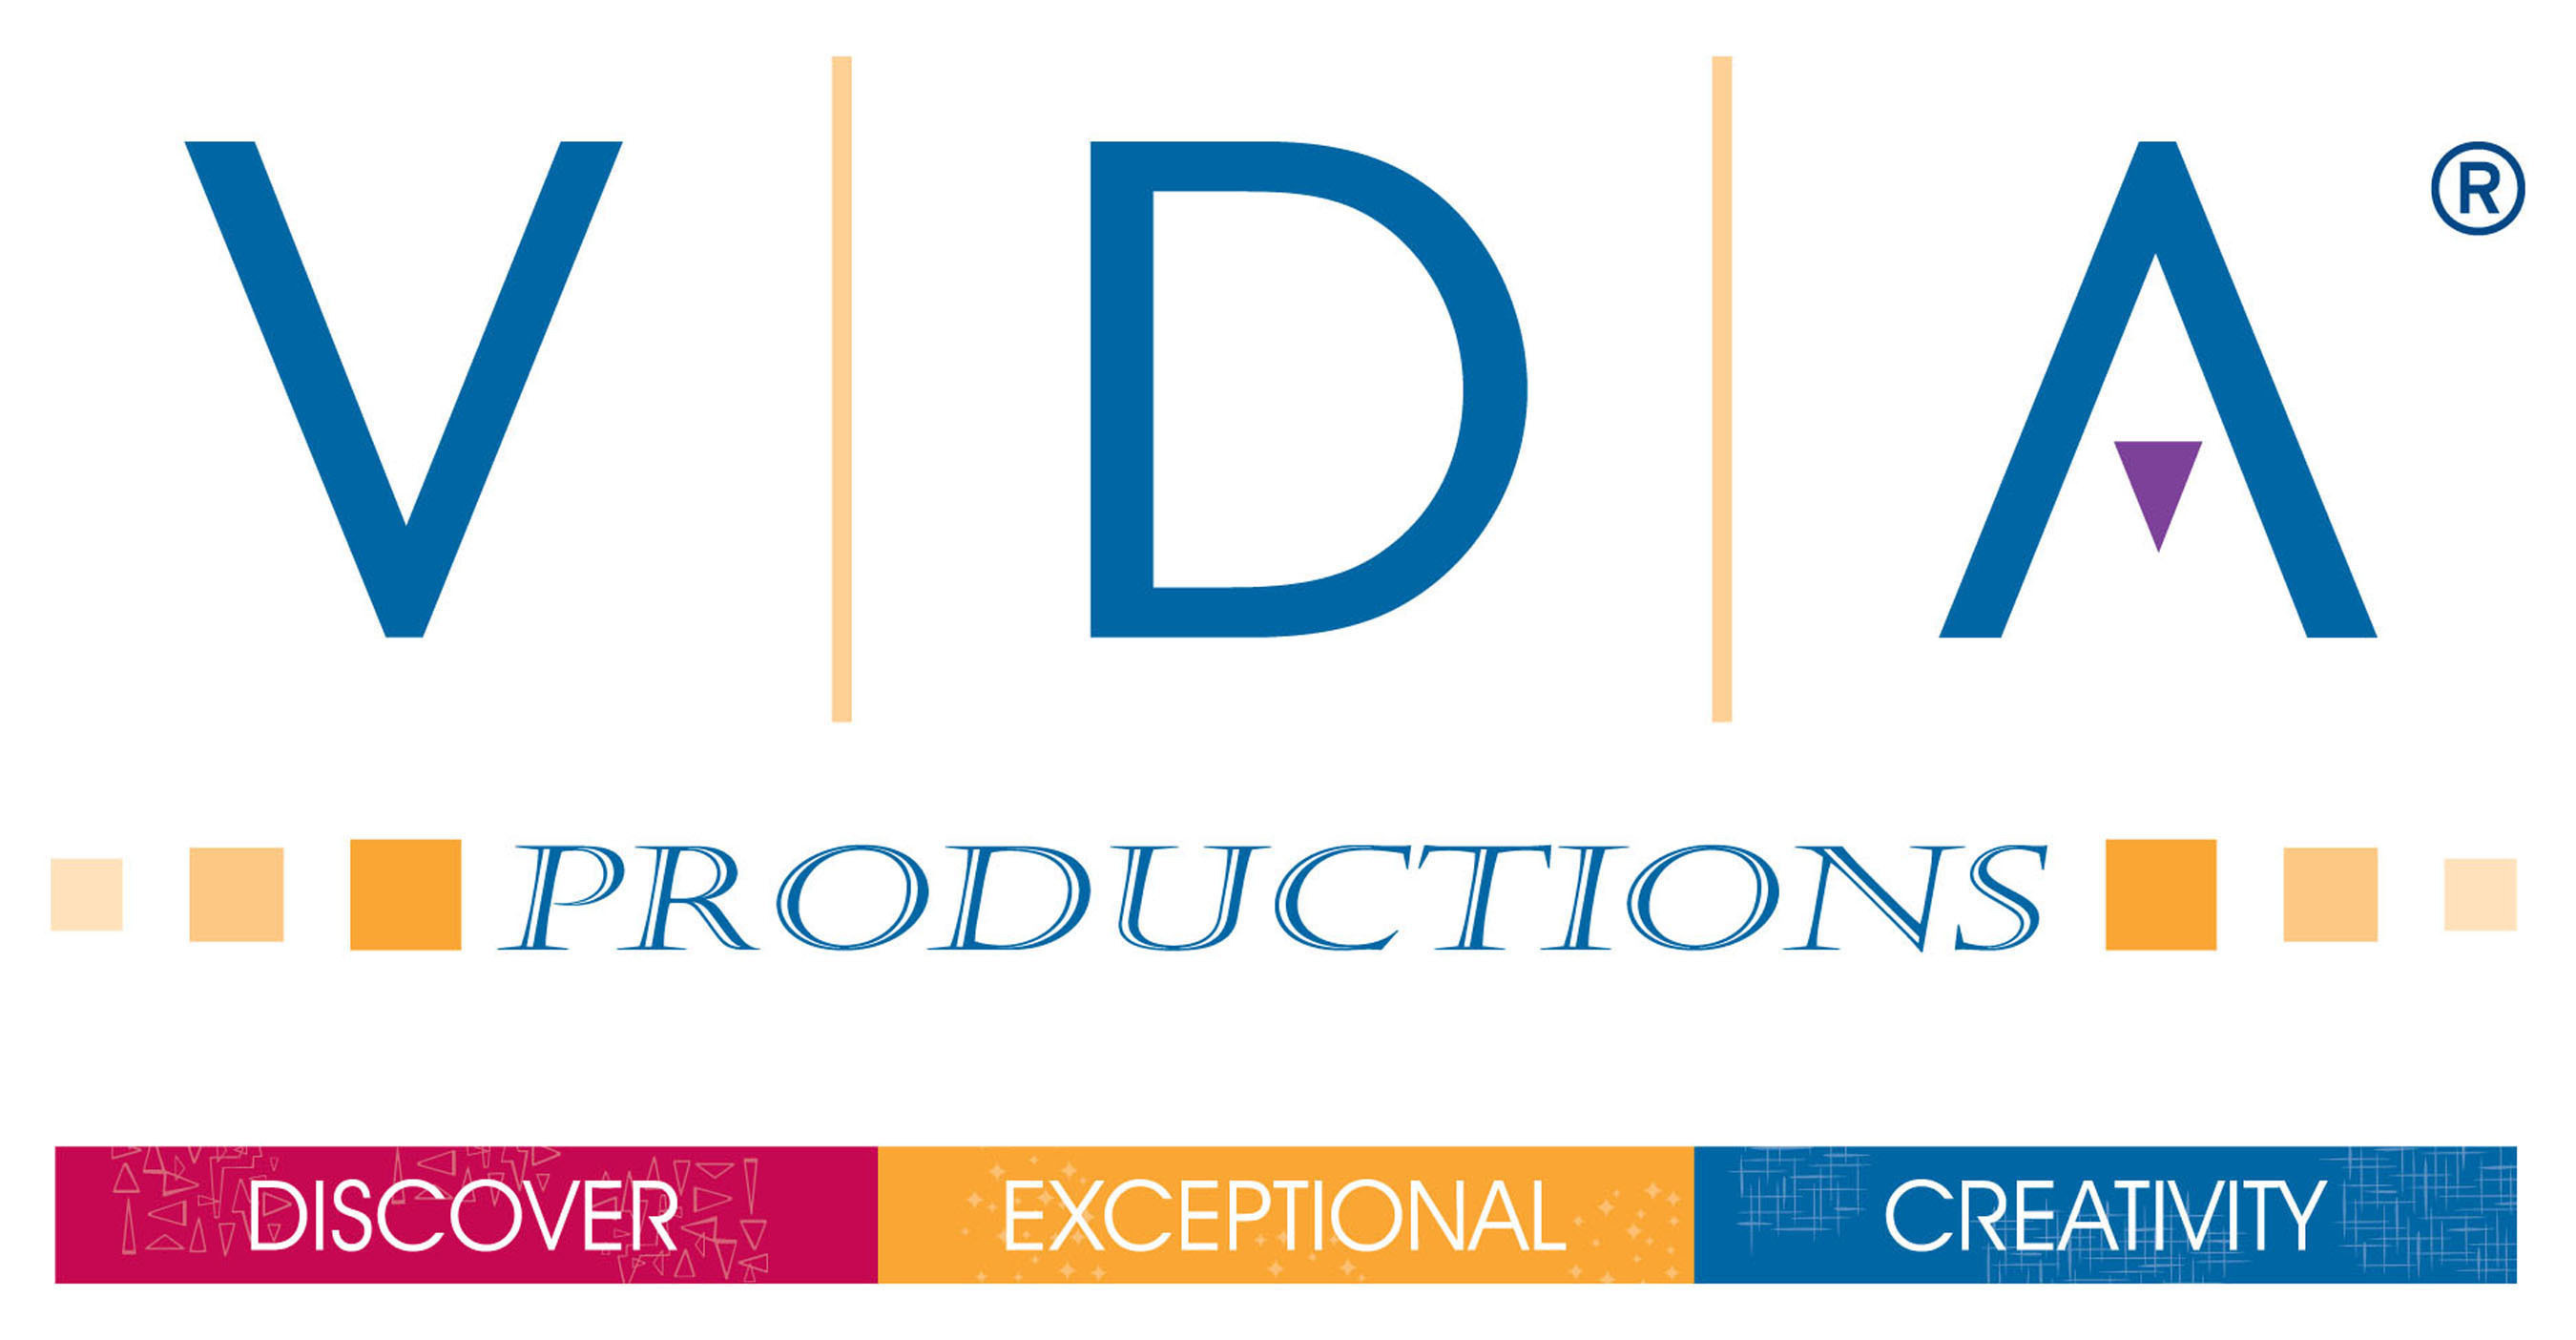 VDA Productions logo. (PRNewsFoto/VDA Productions) (PRNewsFoto/)